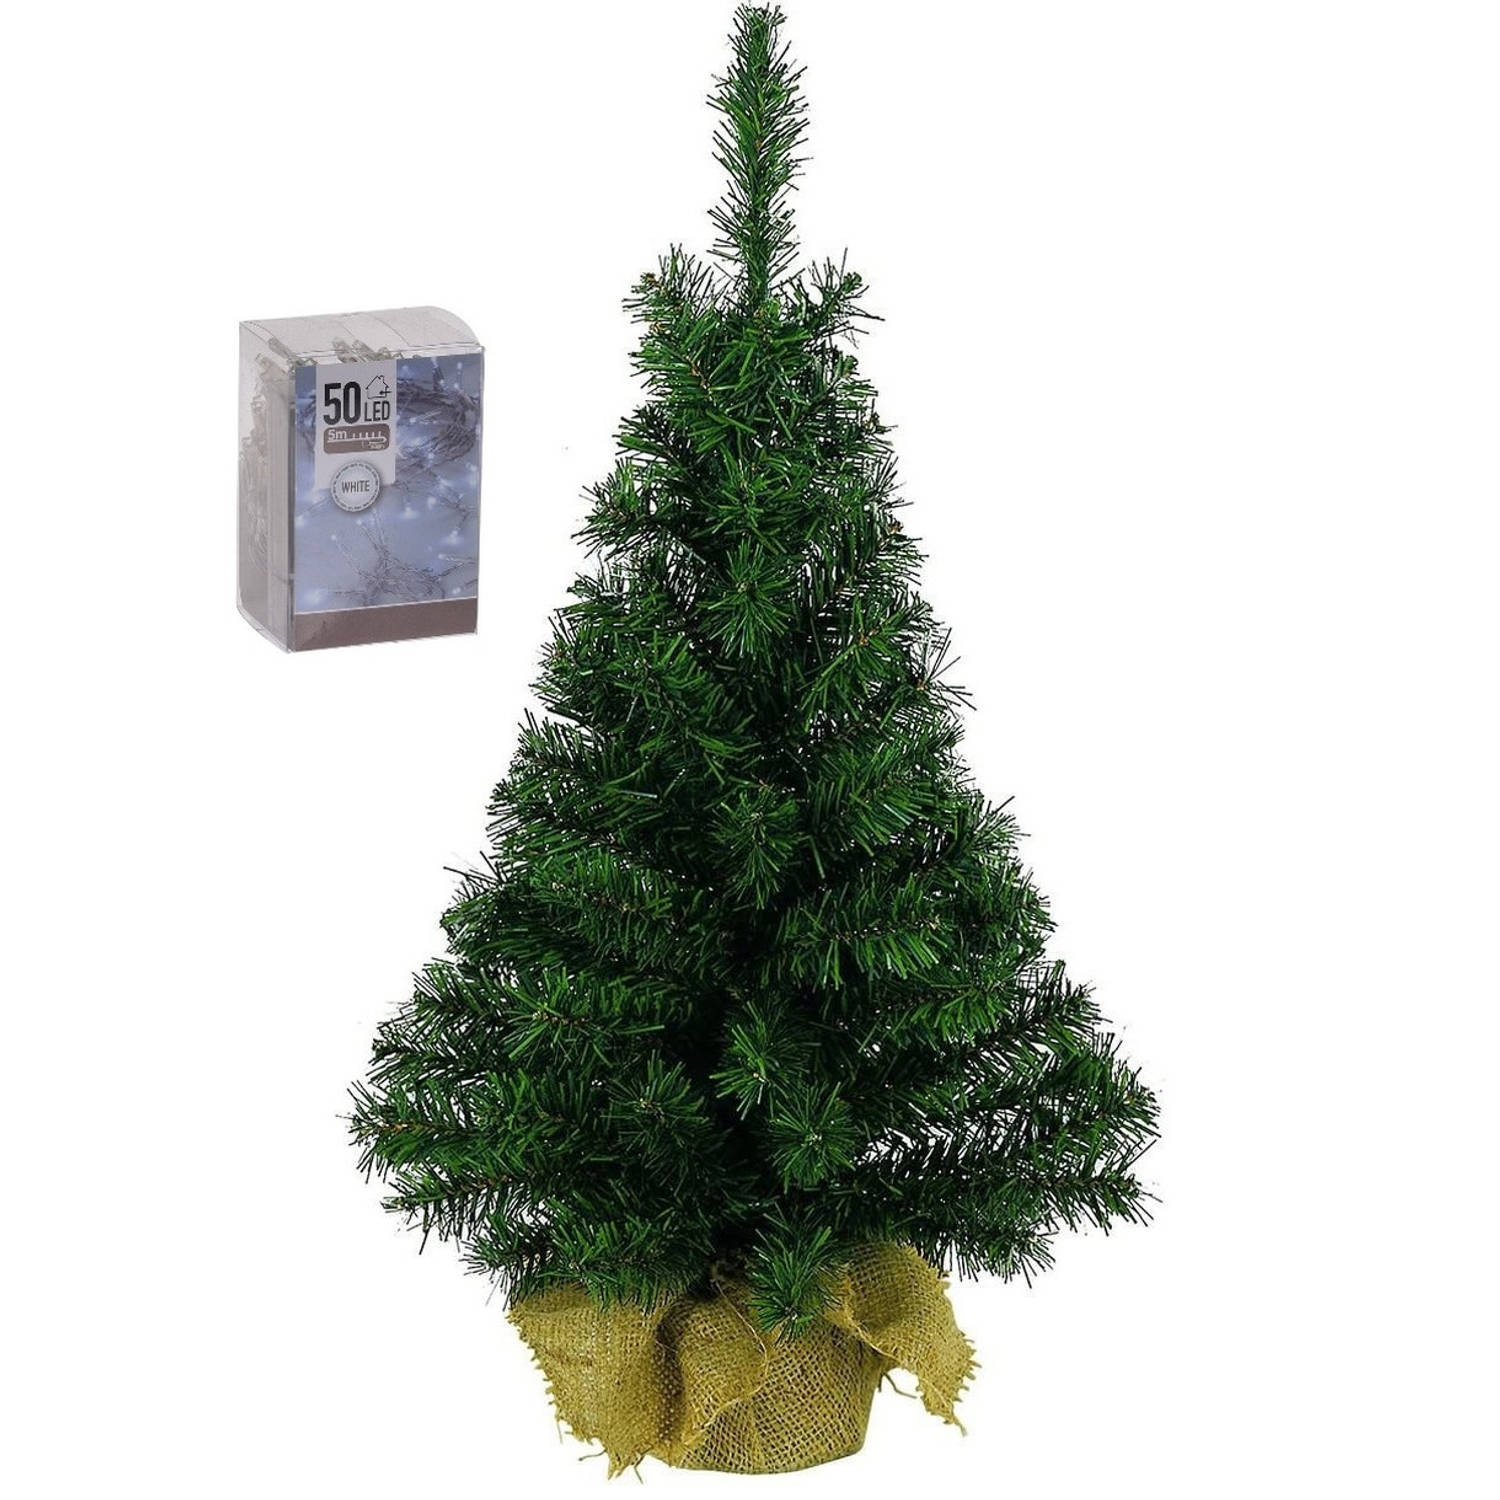 Volle Kunst Kerstboom 75 Cm In Jute Zak Inclusief 50 Helder Witte Lampjes Kunstkerstboom